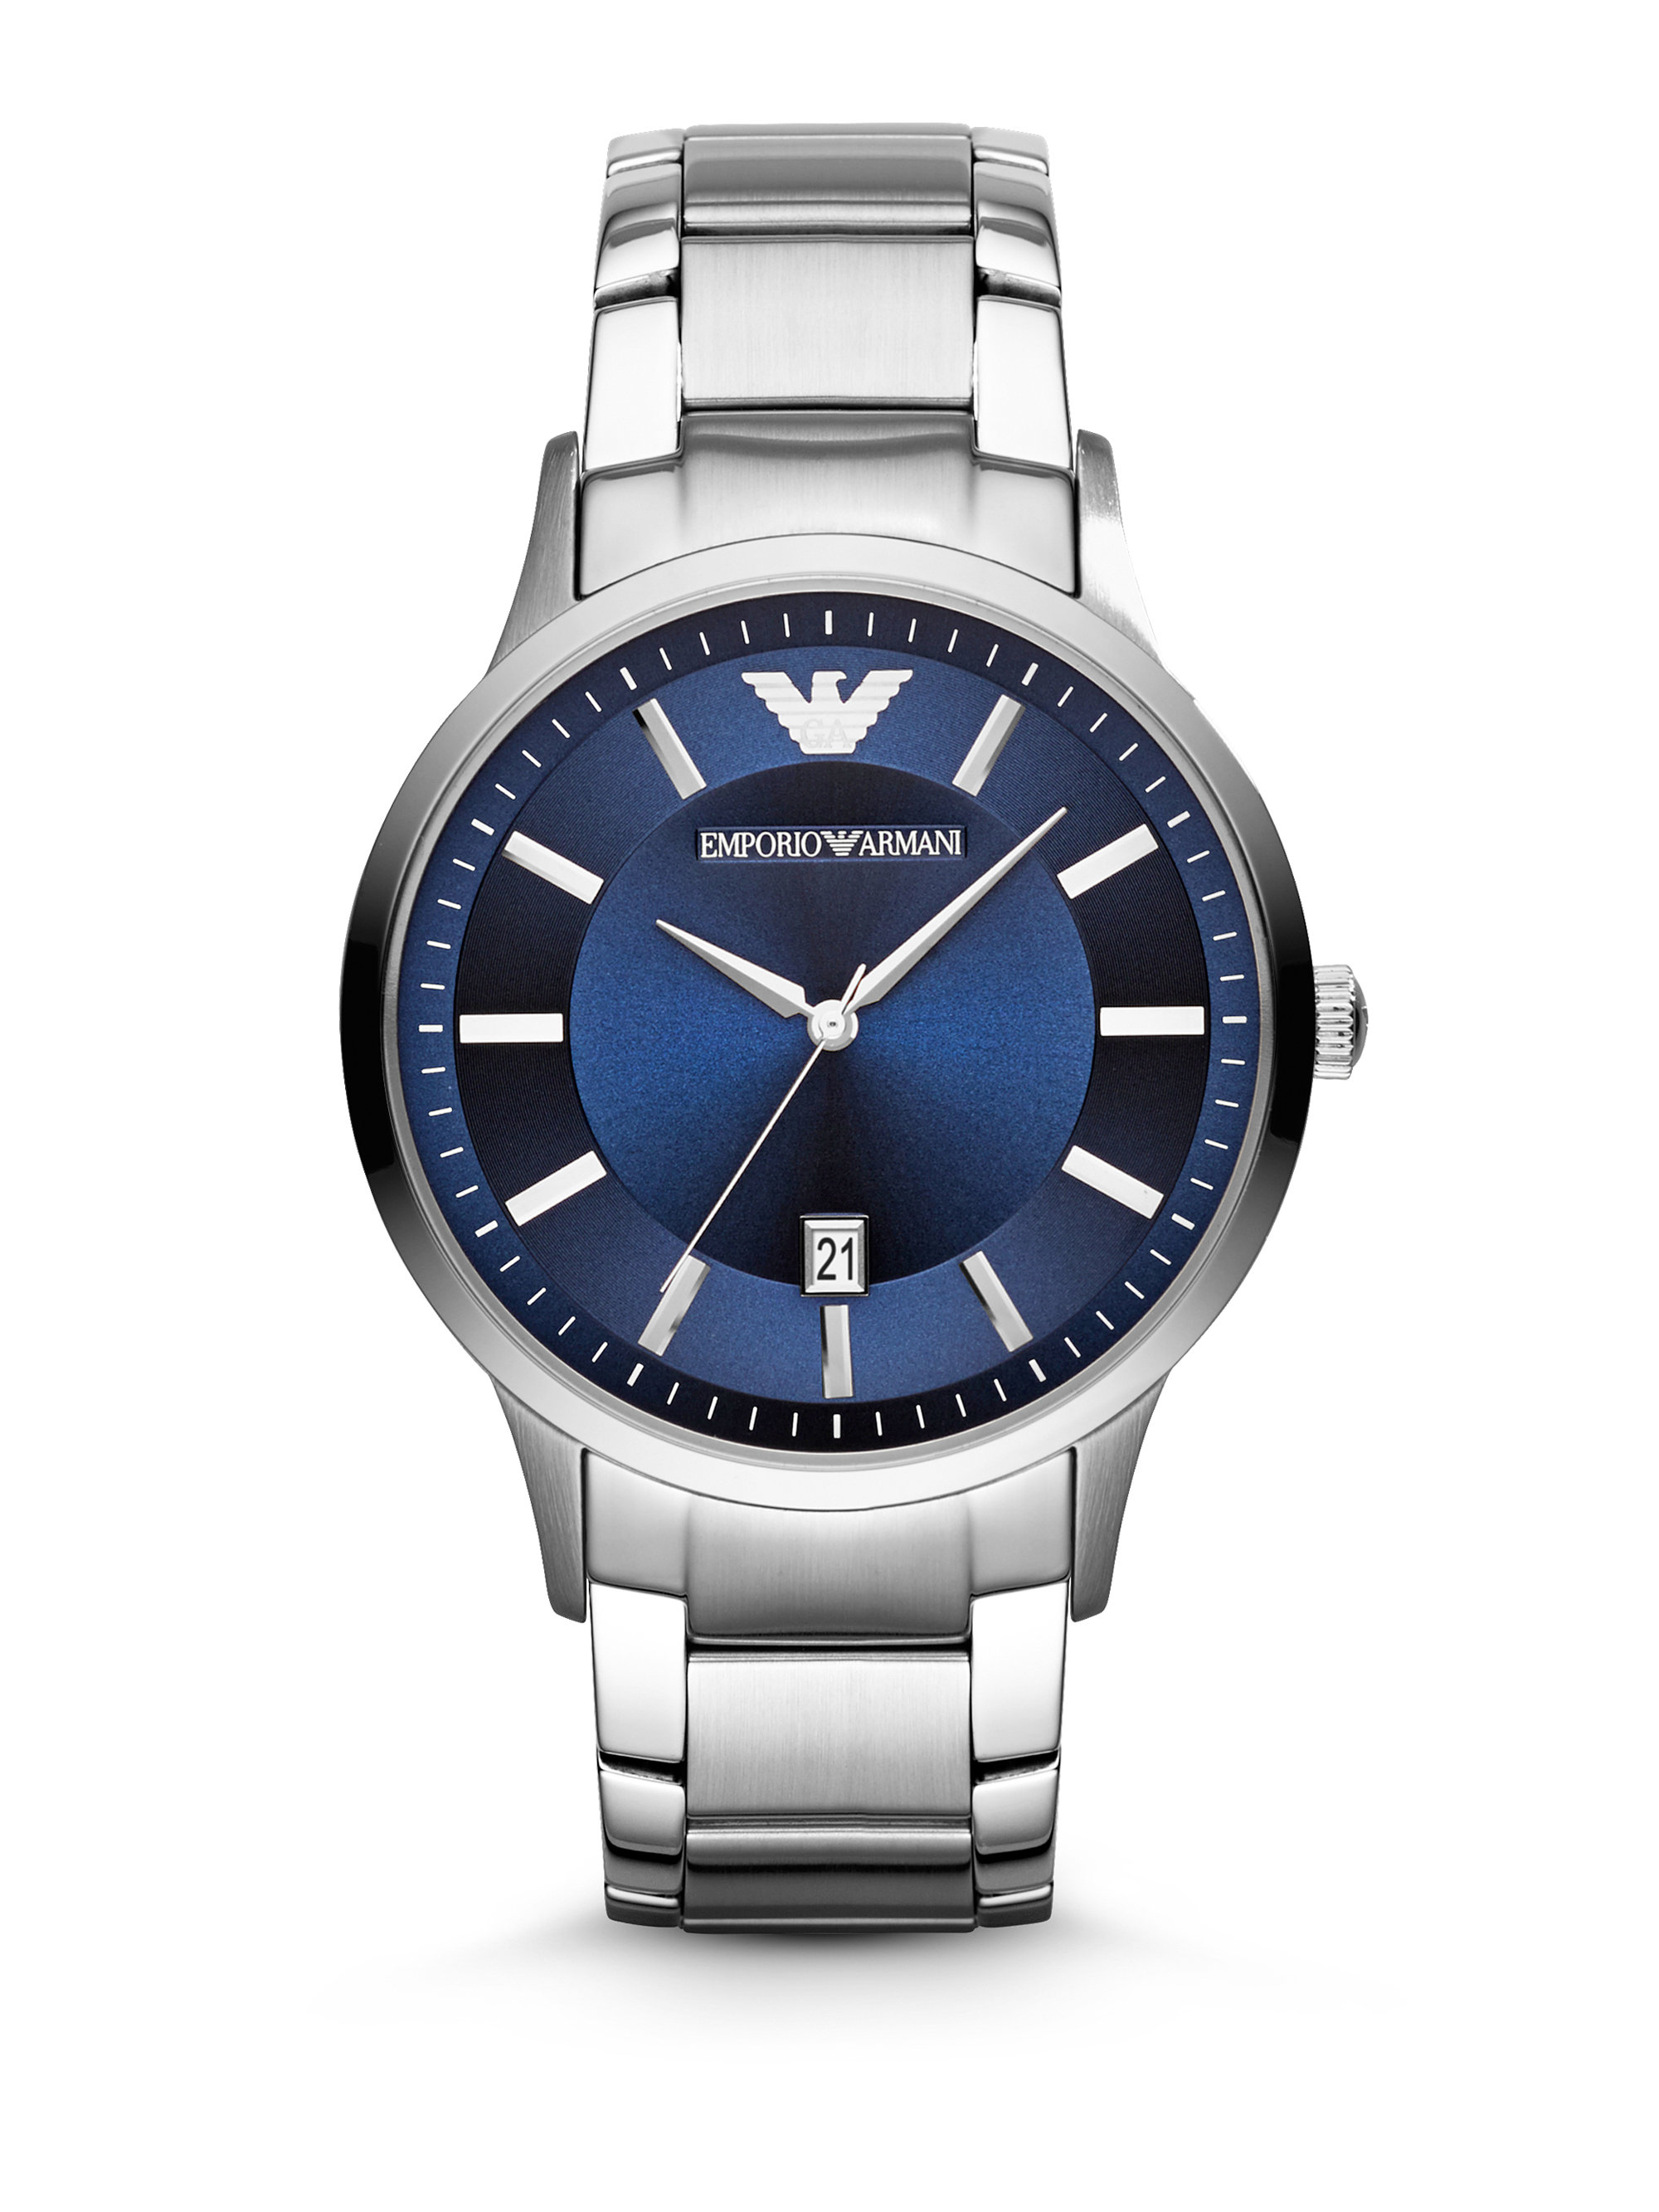 Emporio Armani Round Stainless Steel Watch in Silver for Men (STAINLESS Emporio Armani Stainless Steel Watch